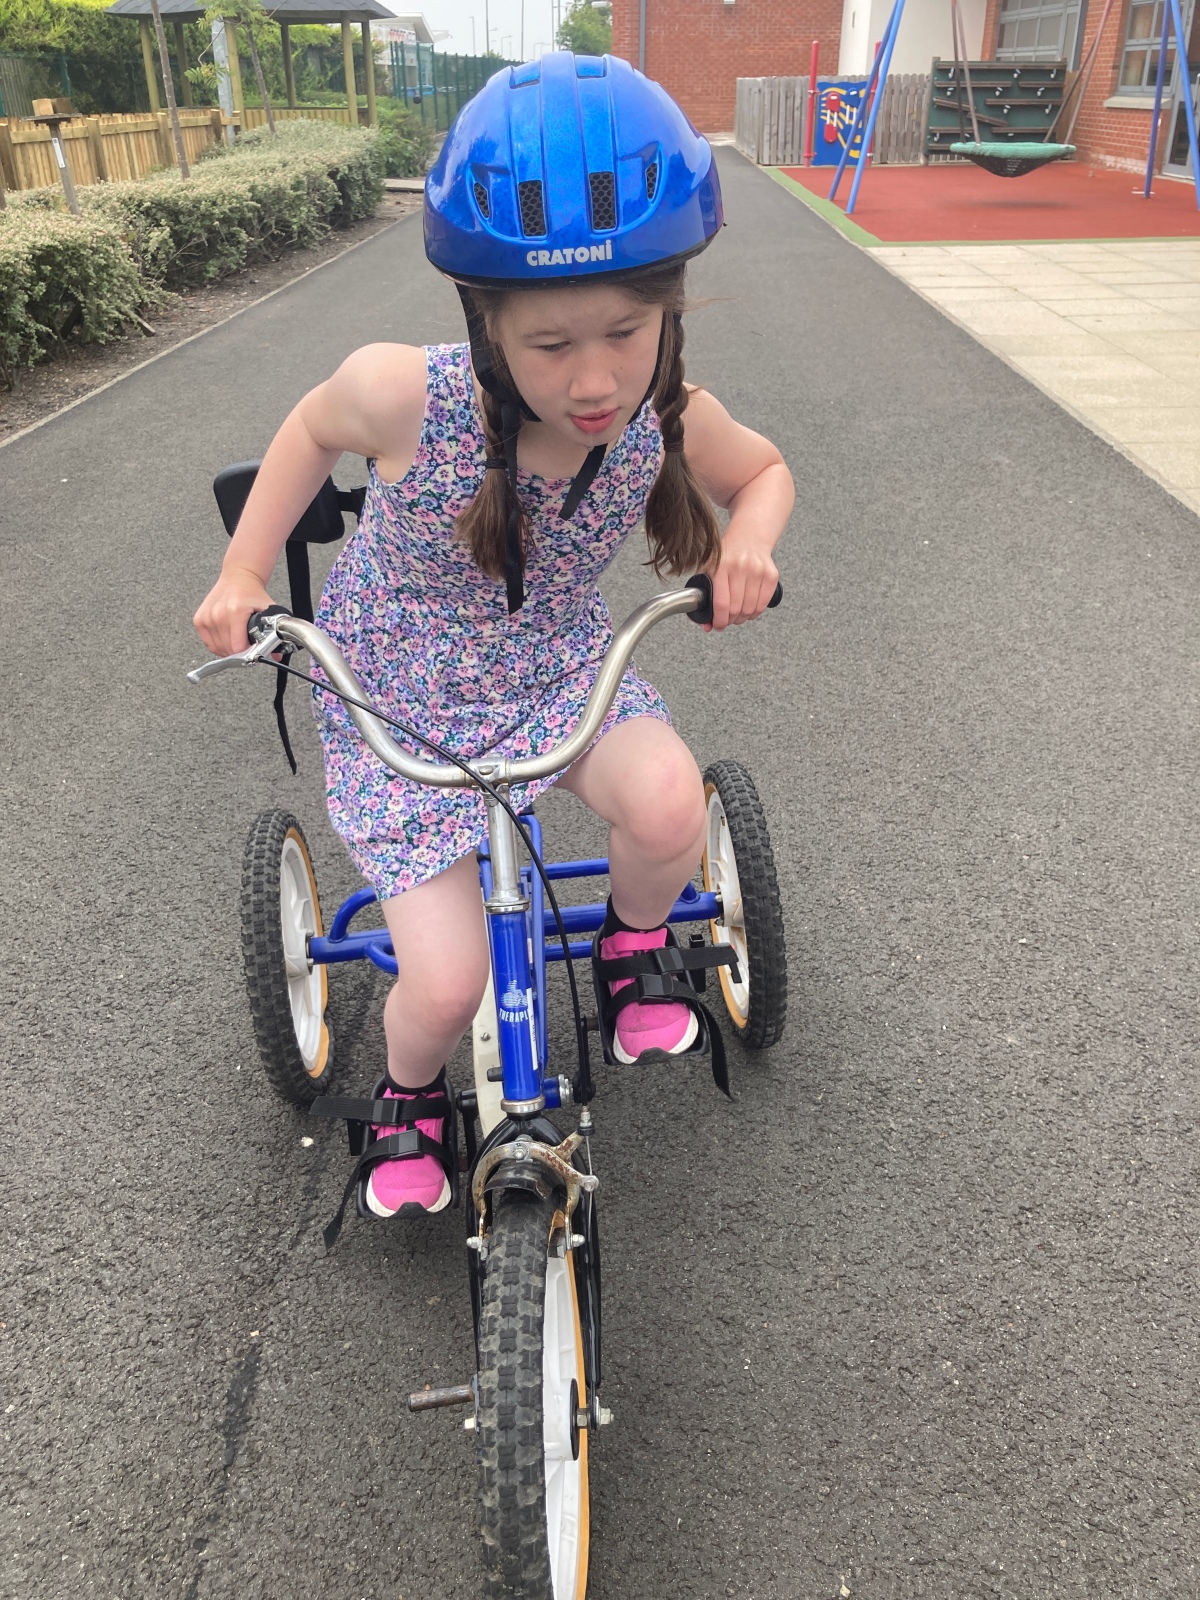 Every child deserves a bike